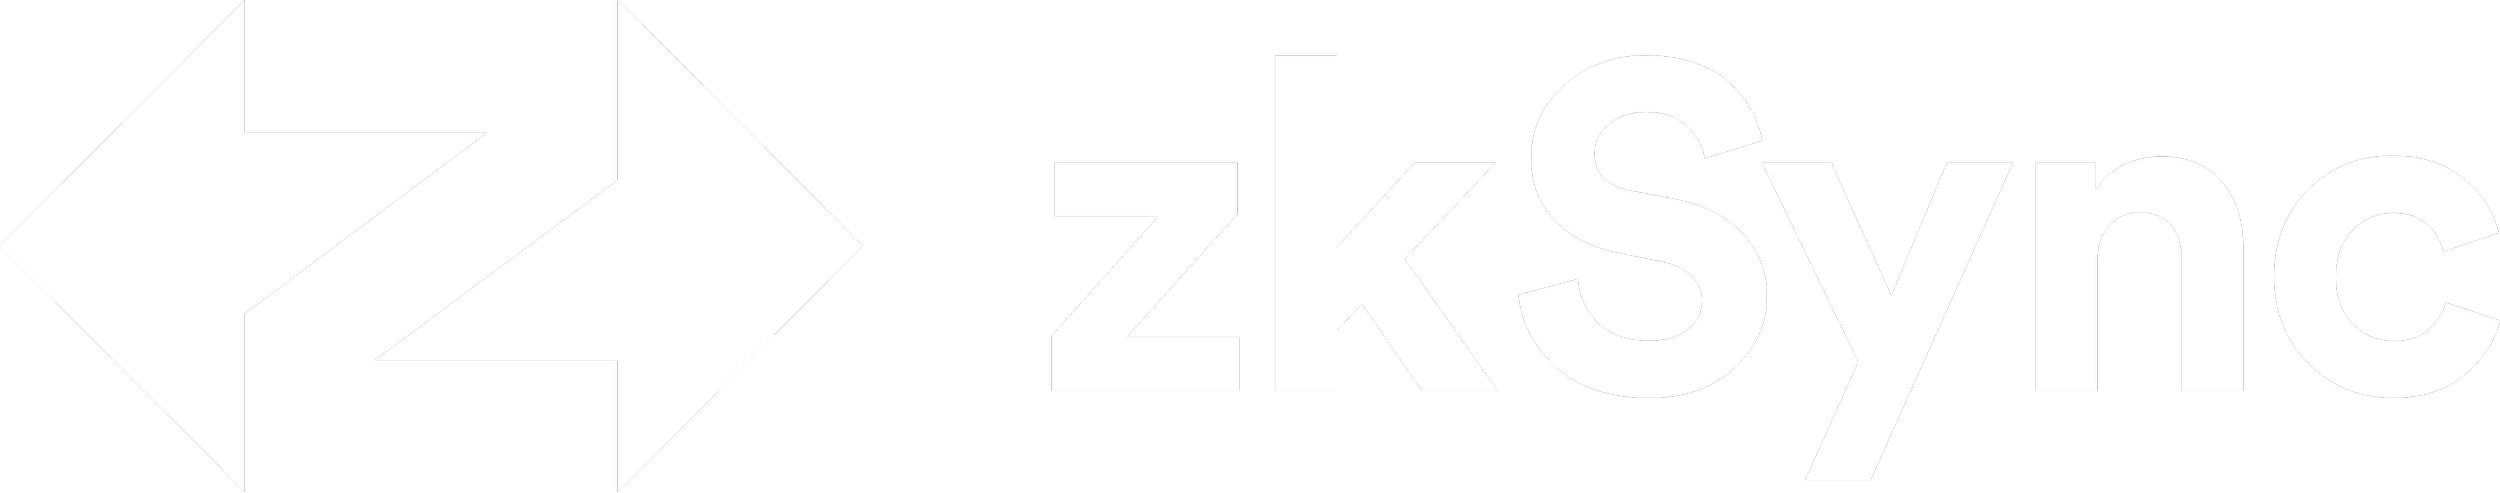 full_logo_zksync-white.png